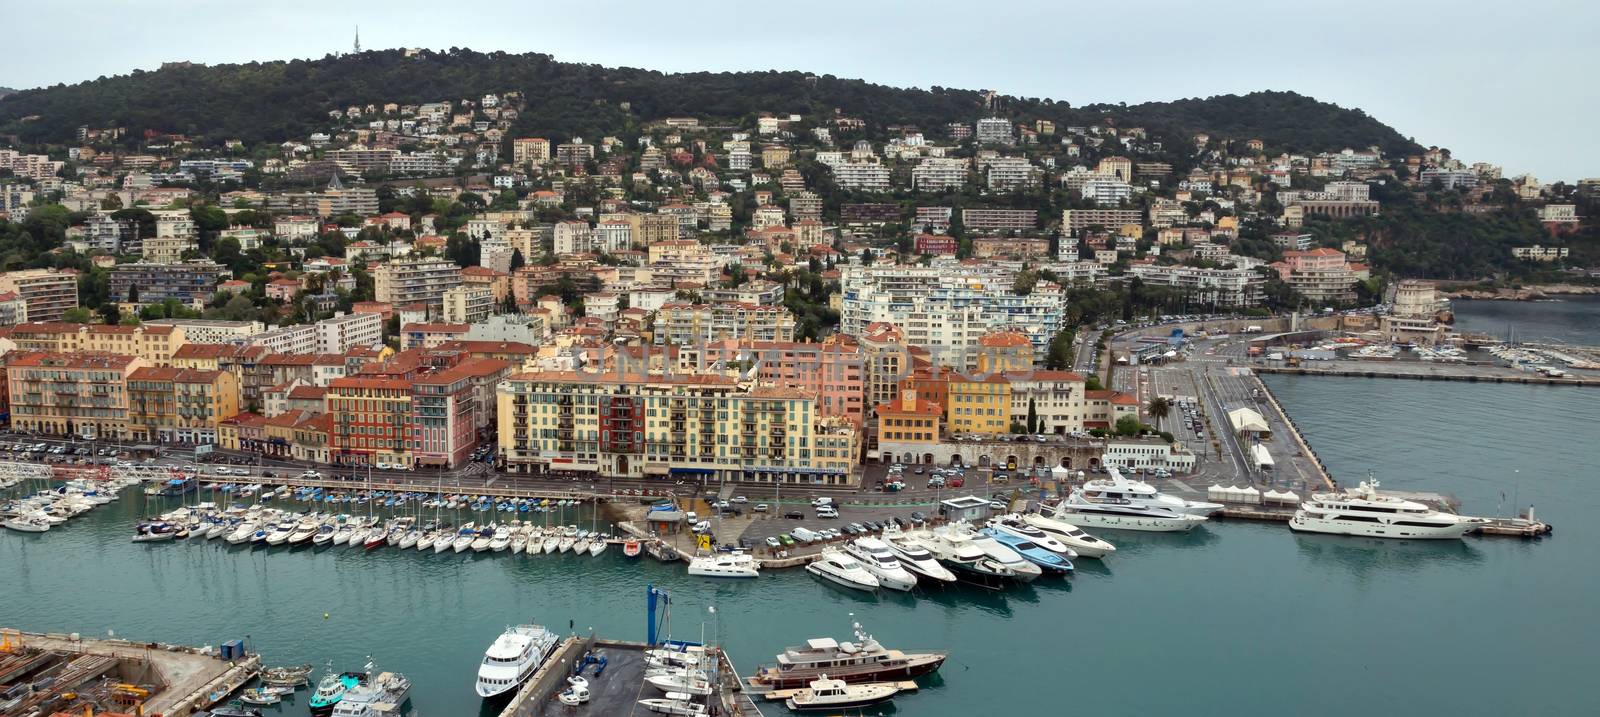 City of Nice - View of Port de Nice by Venakr